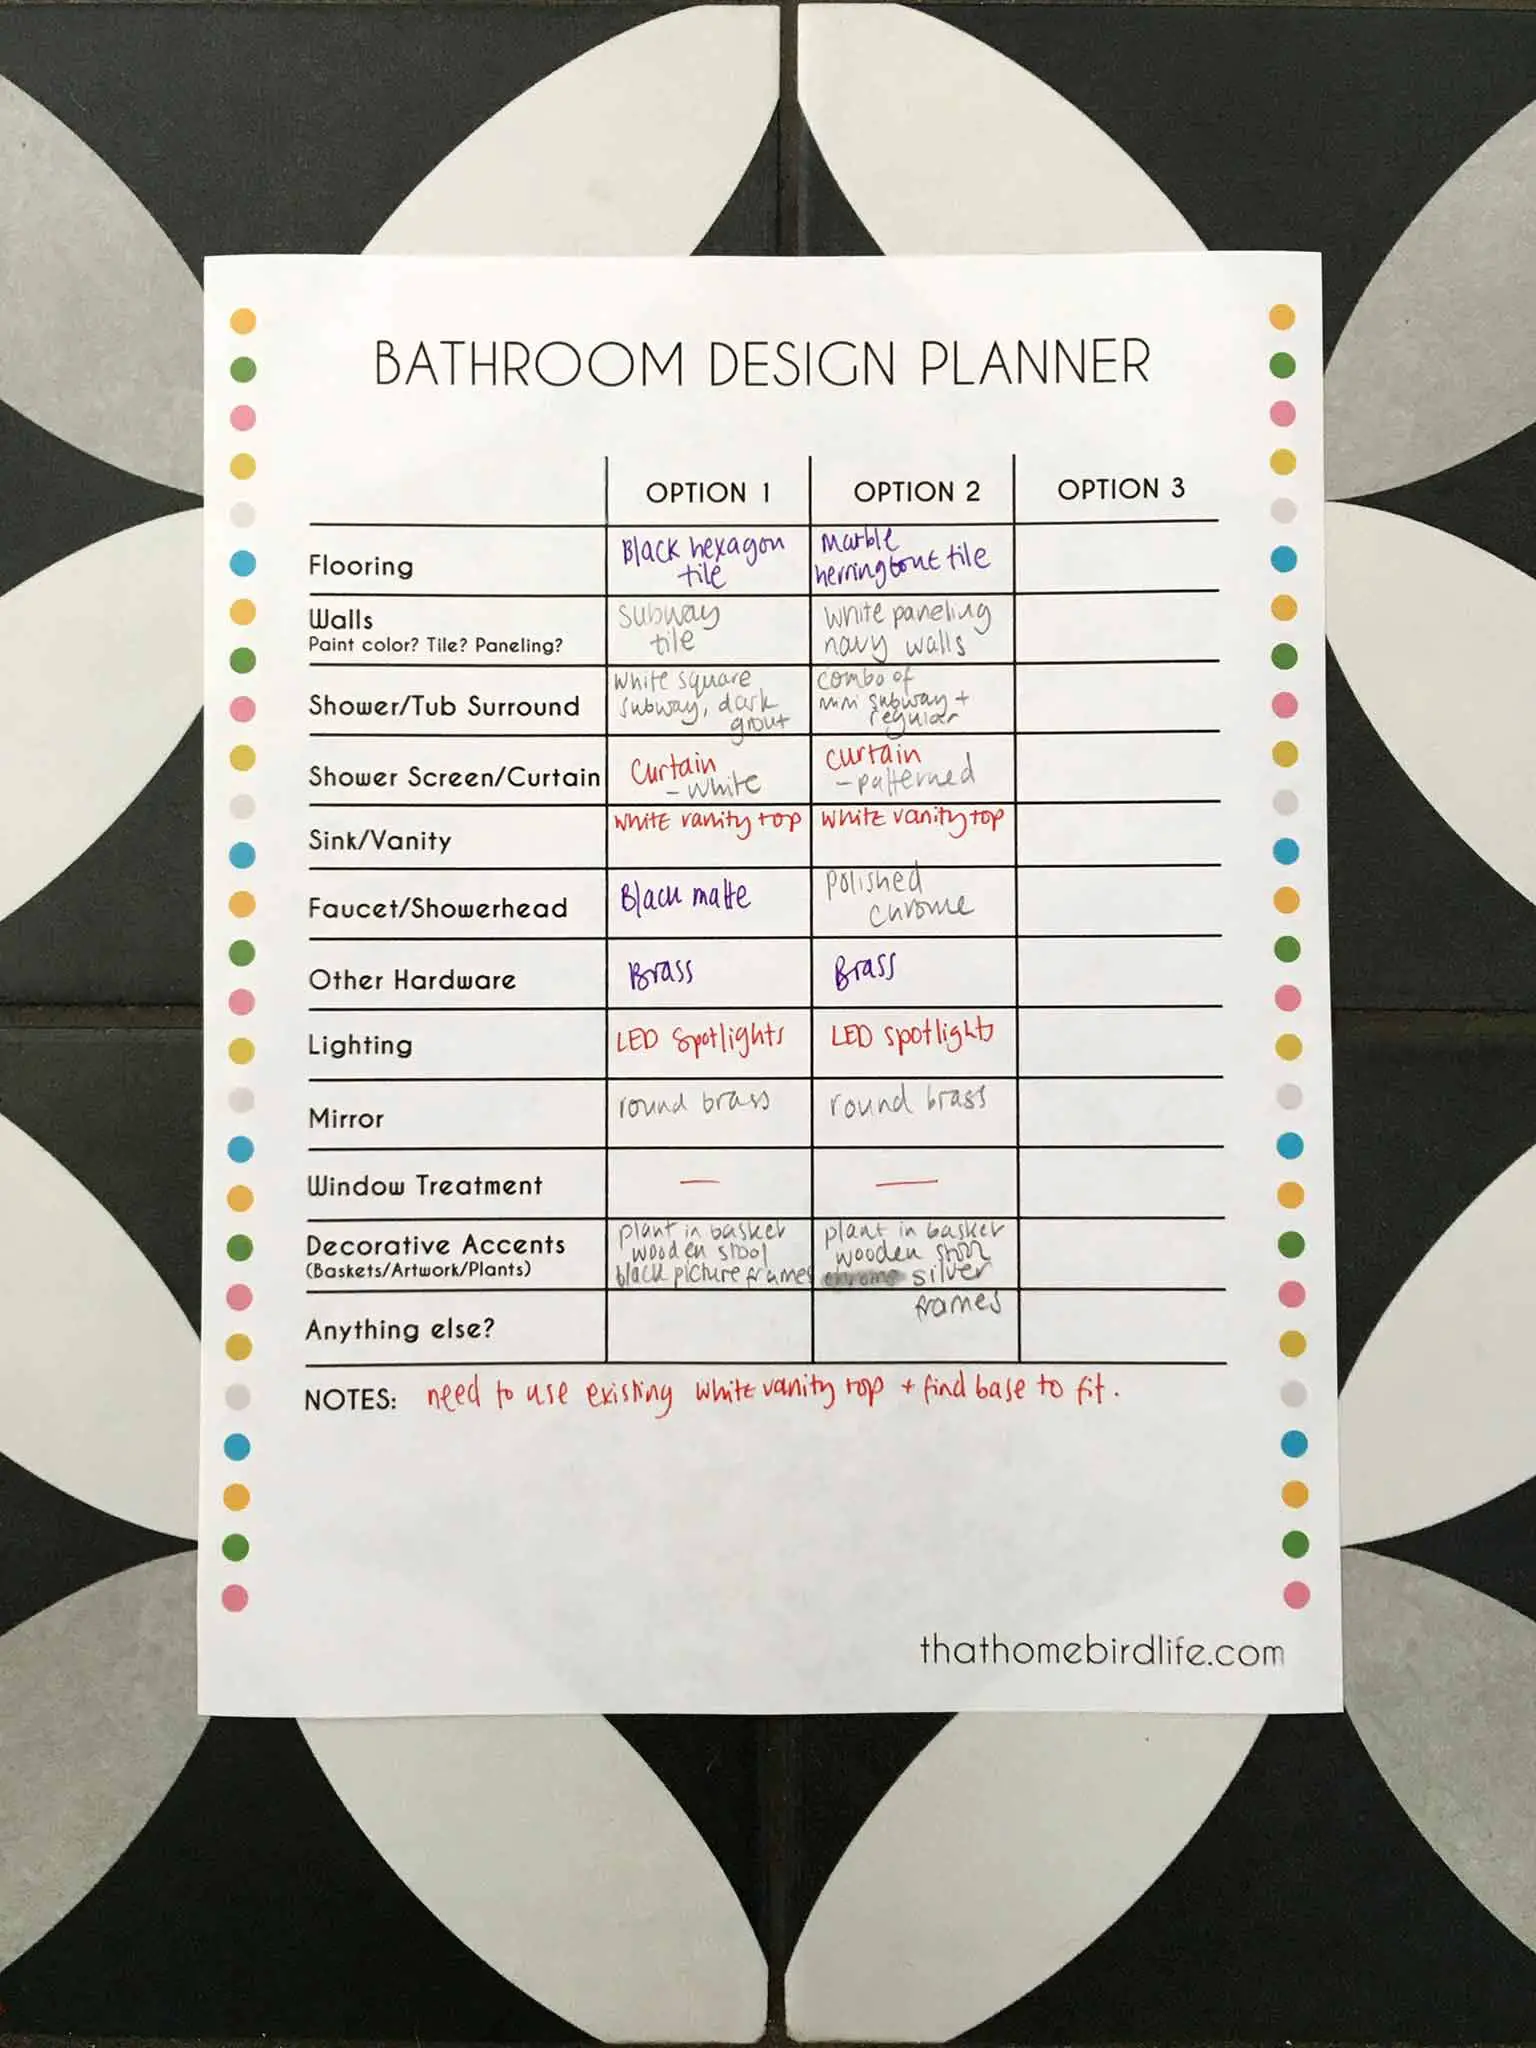 Bathroom design planner printable - That Homebird Life Blog